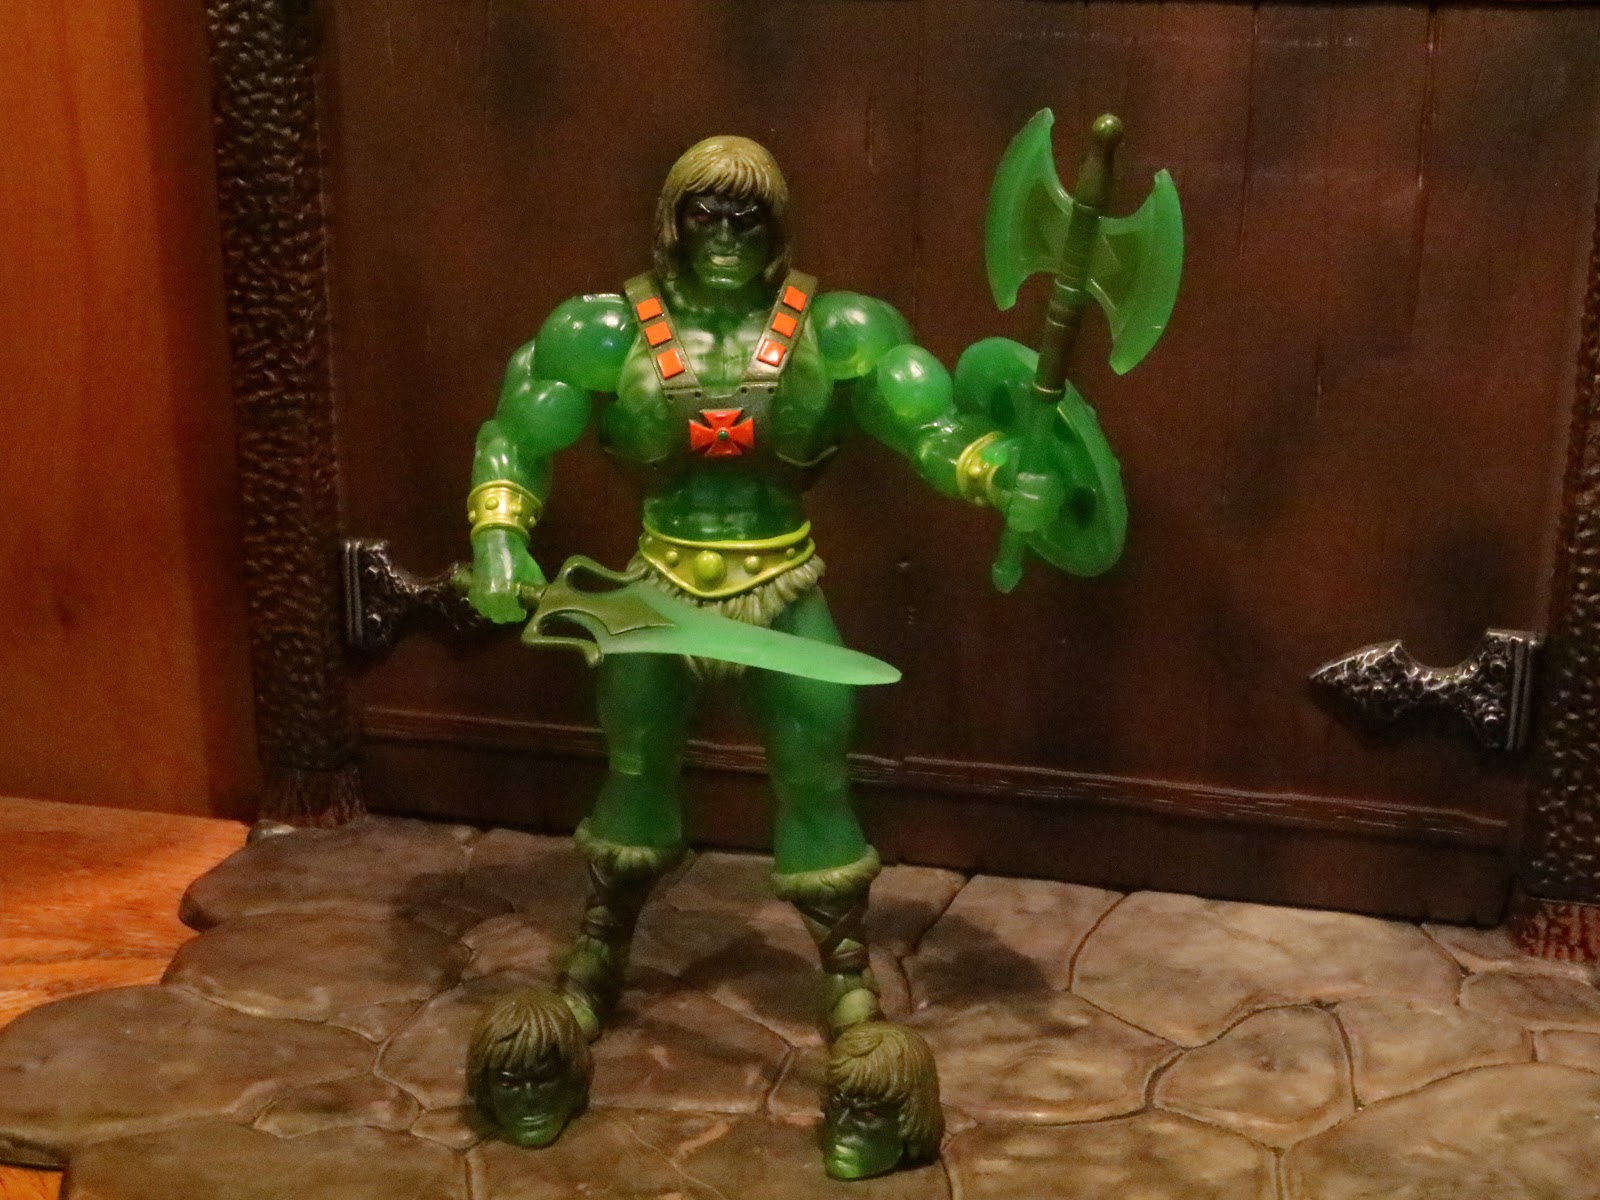 Horde Zombie He-Man